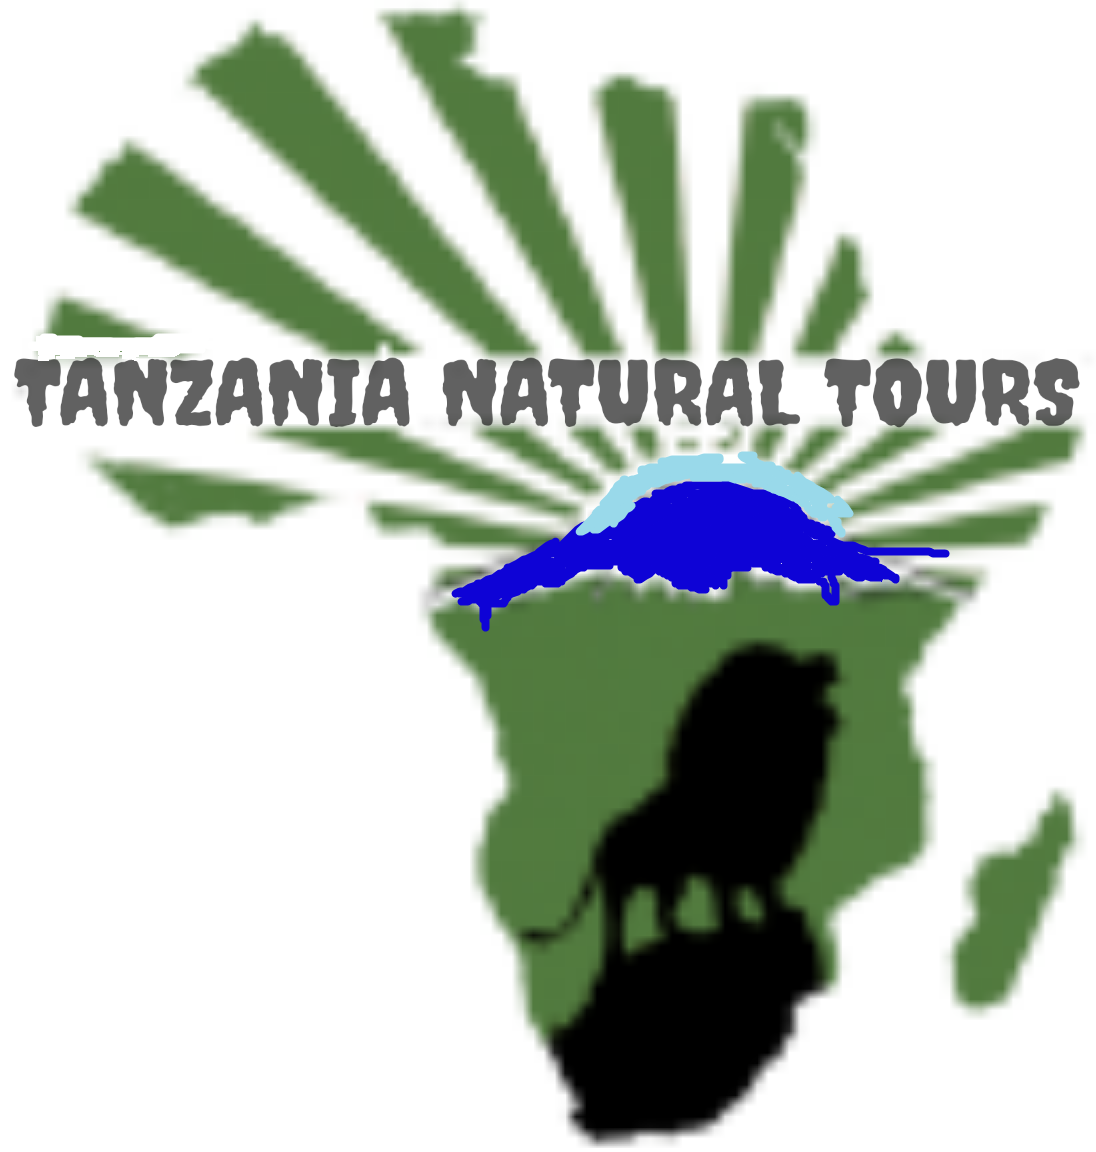 3 Days Zanzibar Stone Town & Beach Packages Holiday Tour,Zanzibar Packages all inclusive 2022